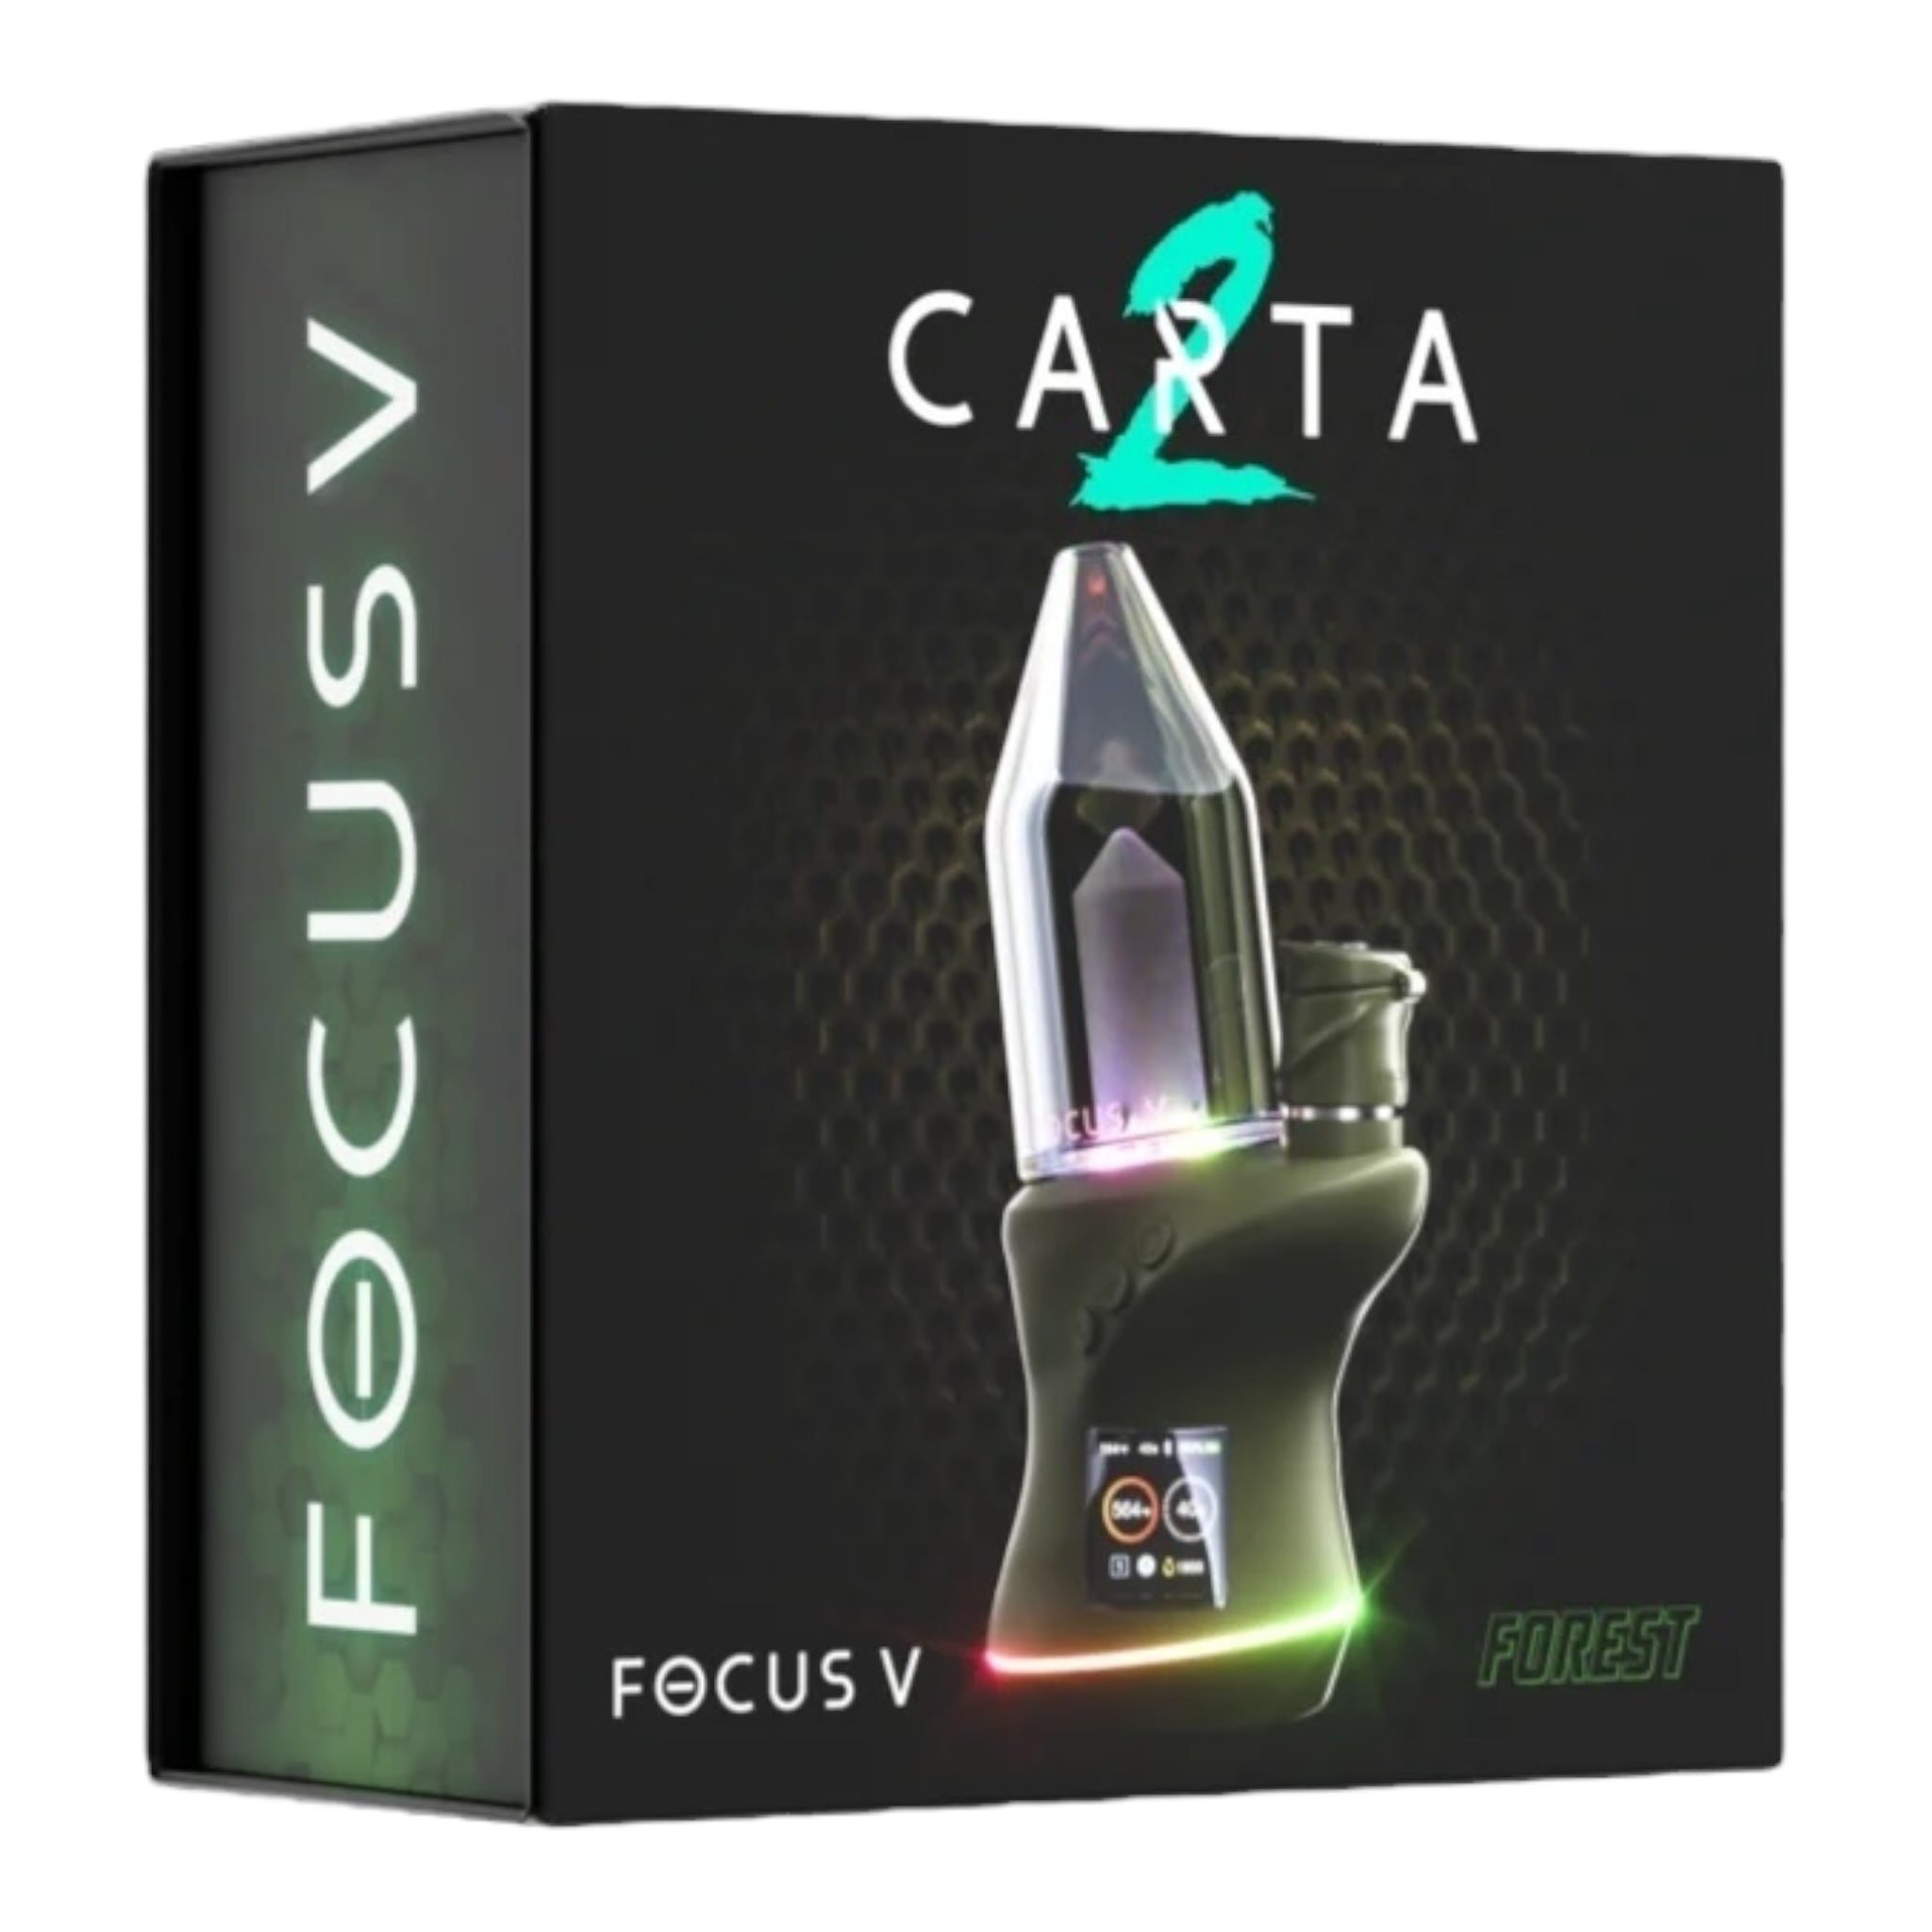 Focus V - CARTA 2 - Portable Dry Herb & Wax Oil Vaporizer